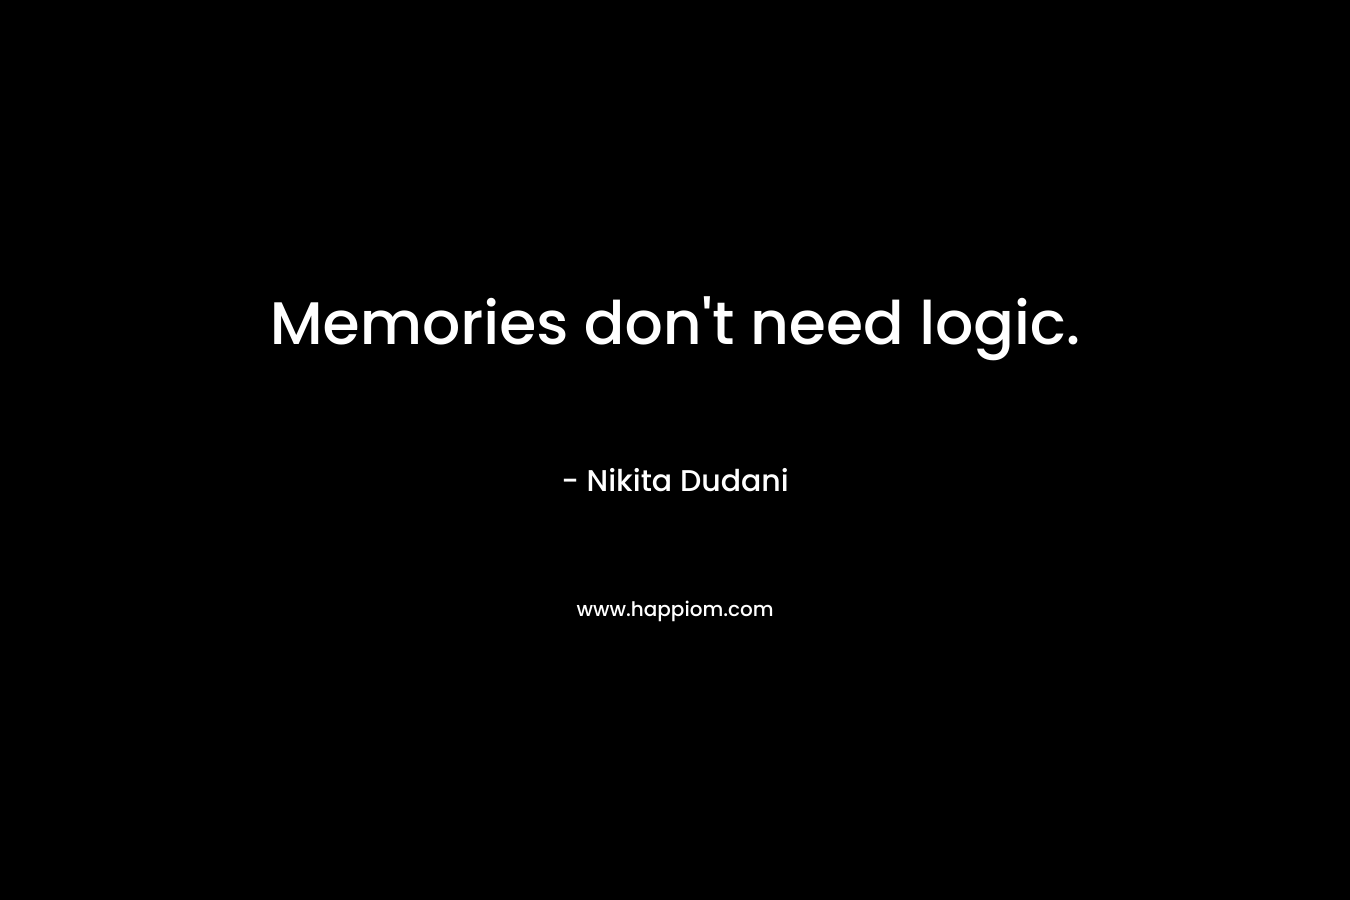 Memories don’t need logic. – Nikita Dudani